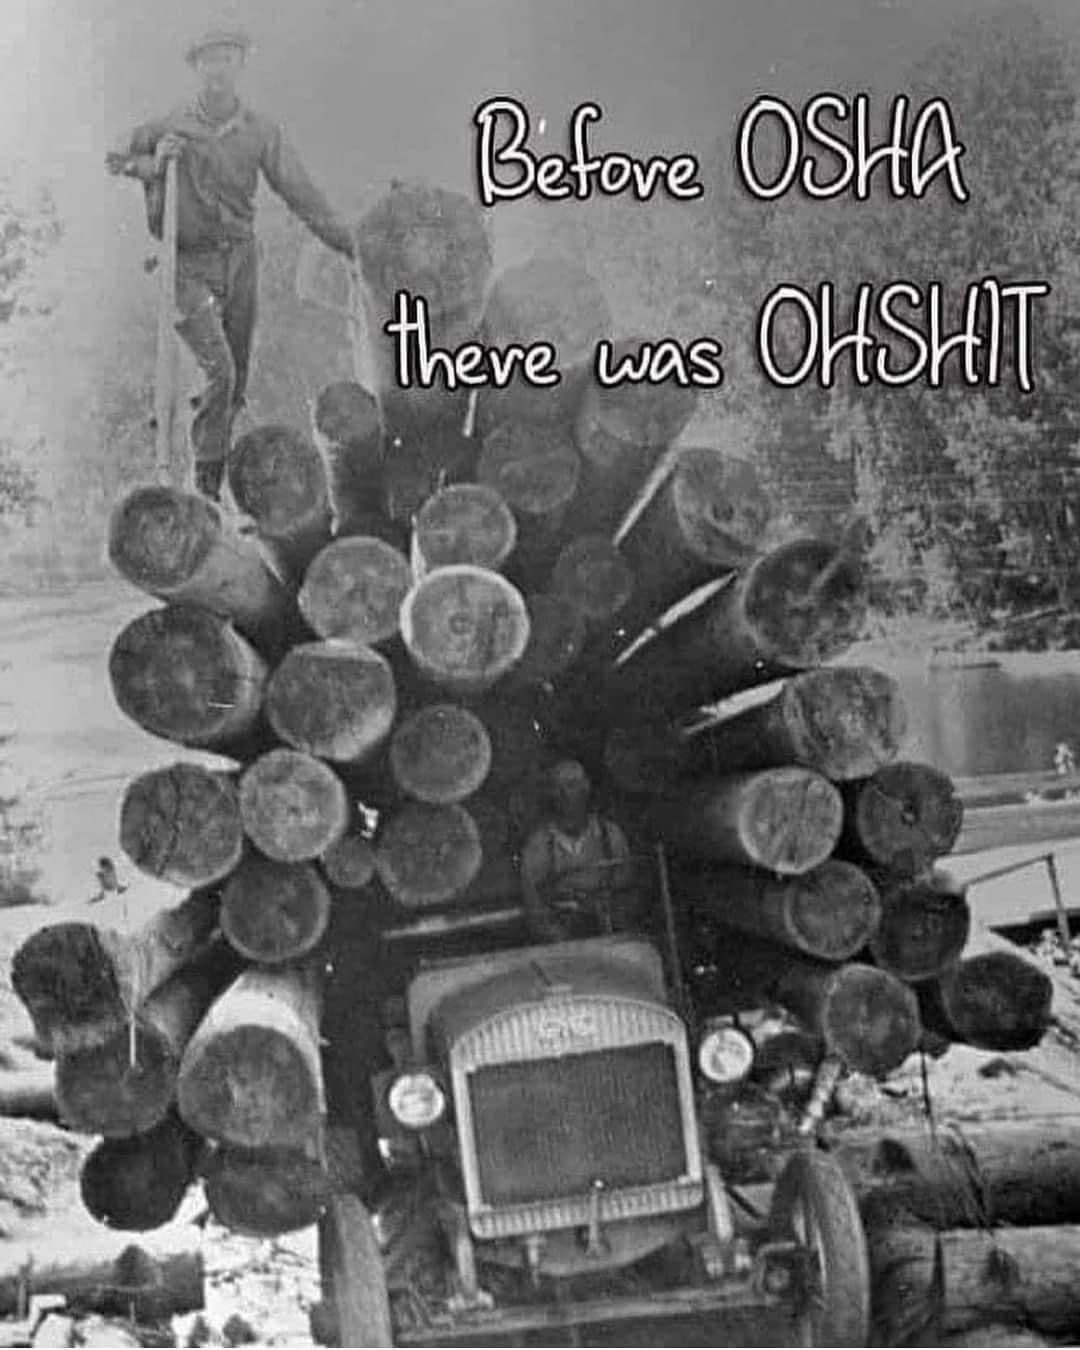 before osha - Before Osha there was Ohshit